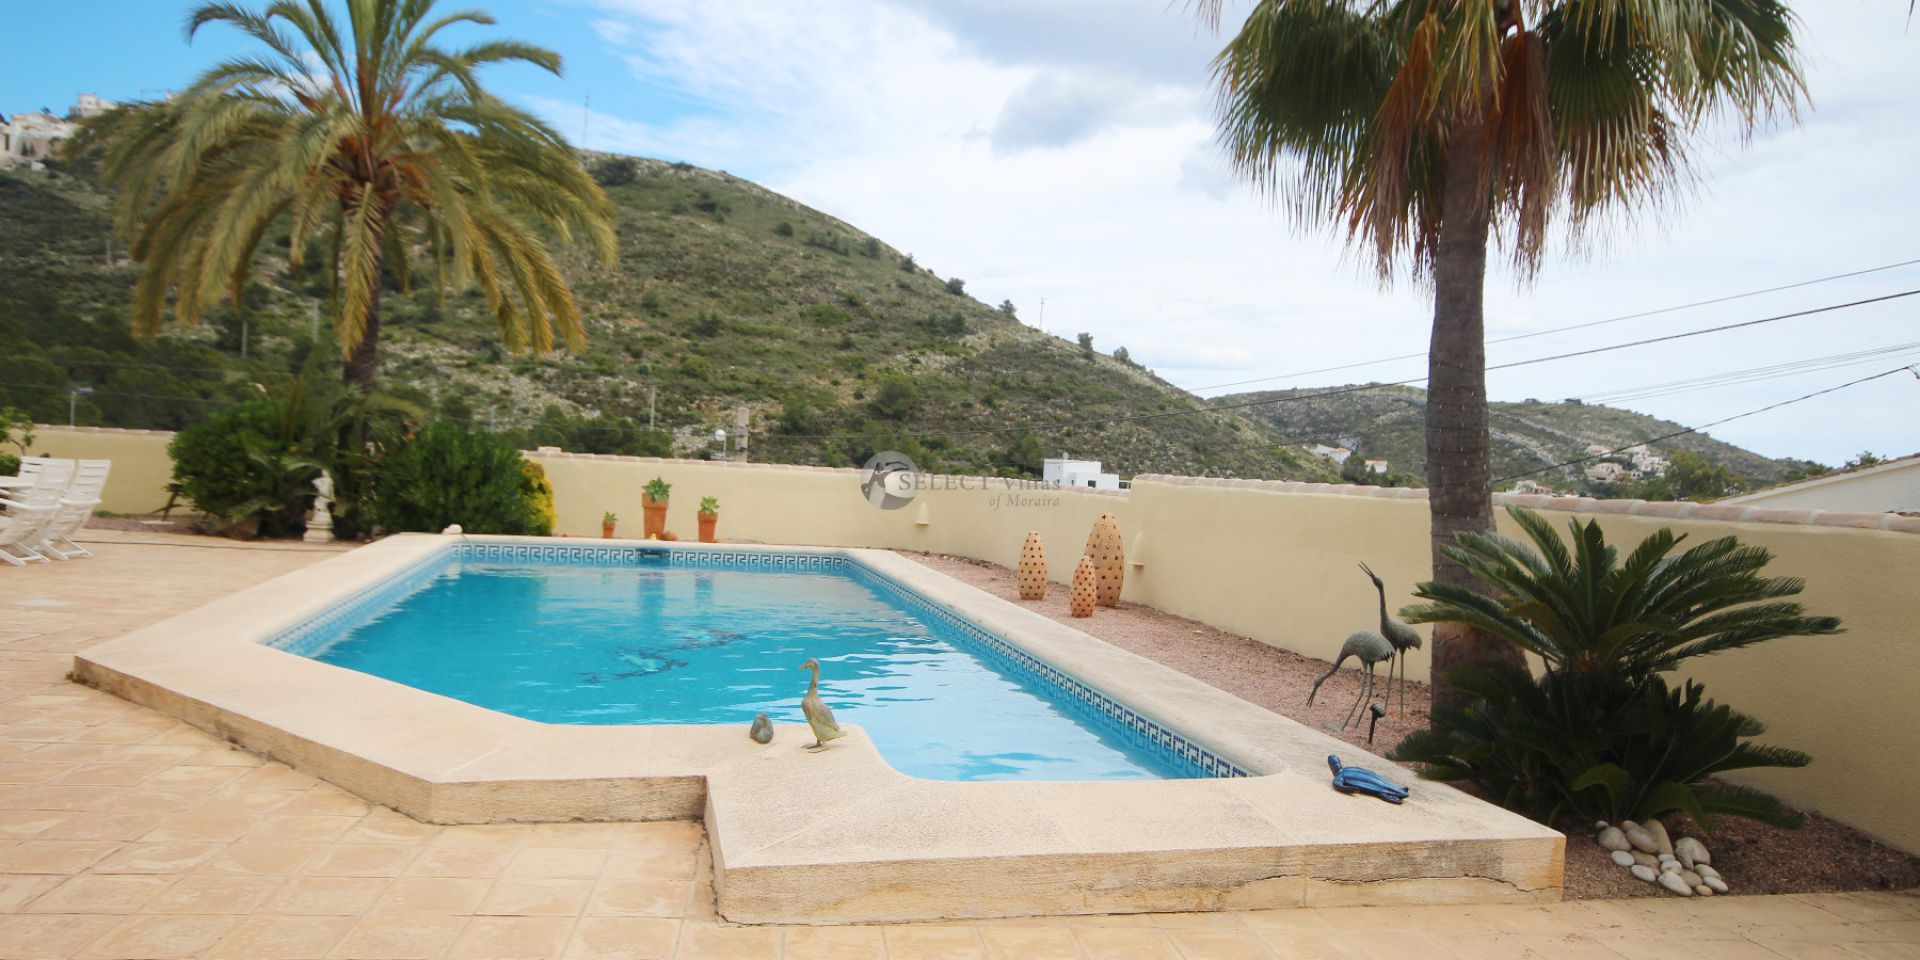 Villa de luxe avec piscine à vendre à Moraira